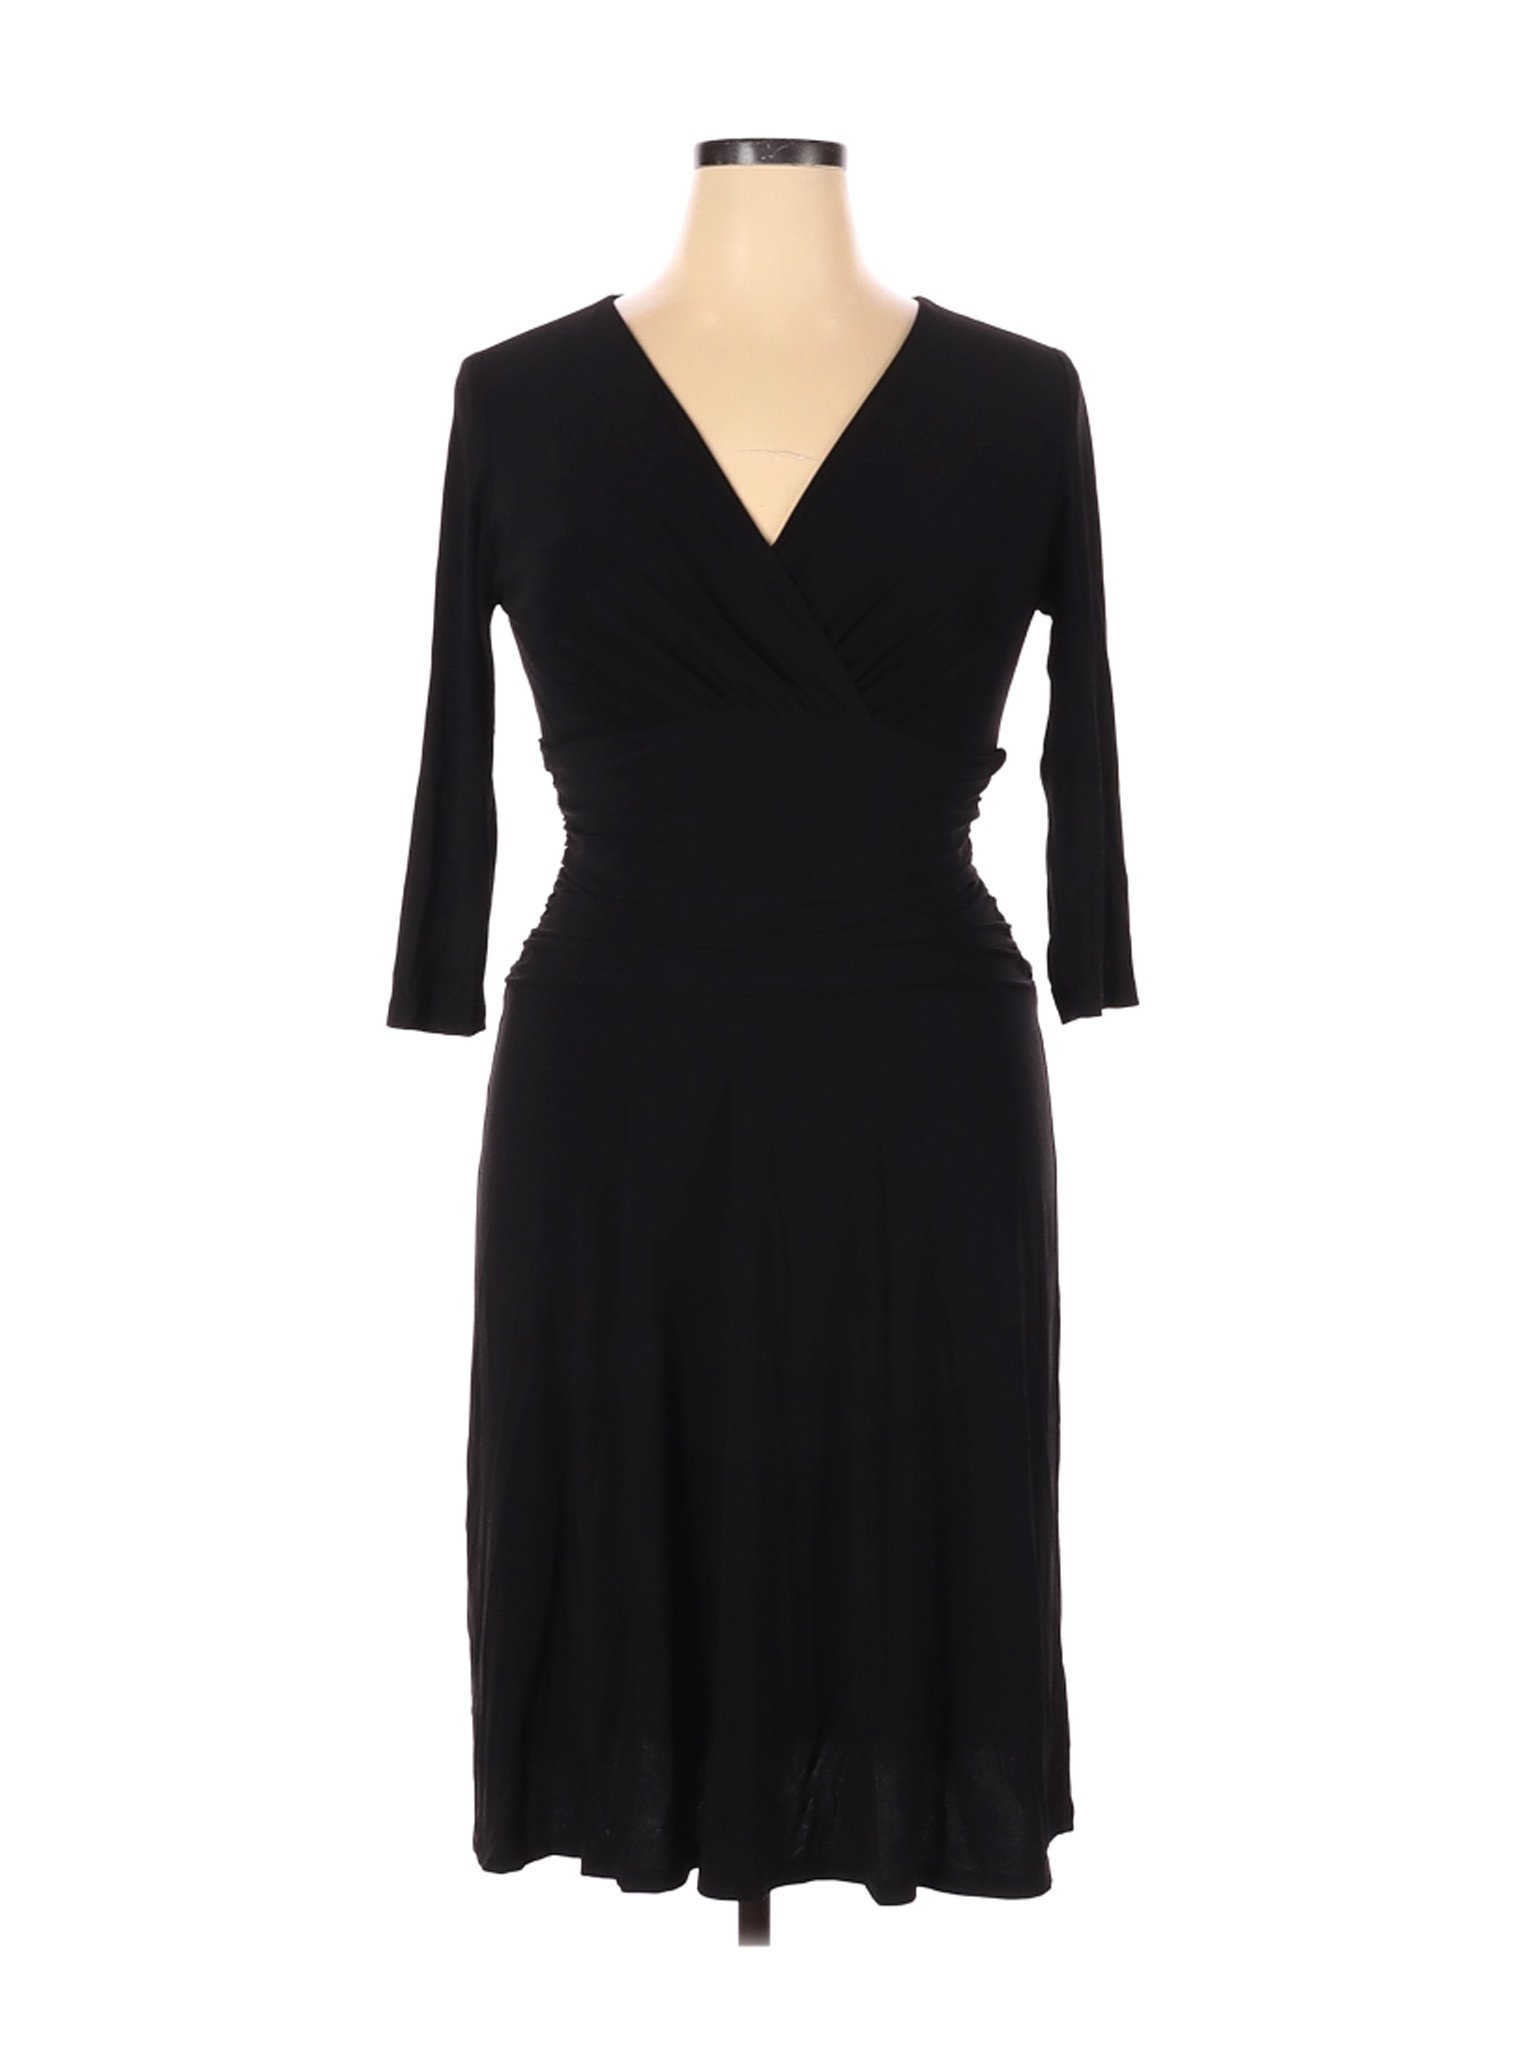 Nine West Women Black Cocktail Dress 14 Petites | eBay